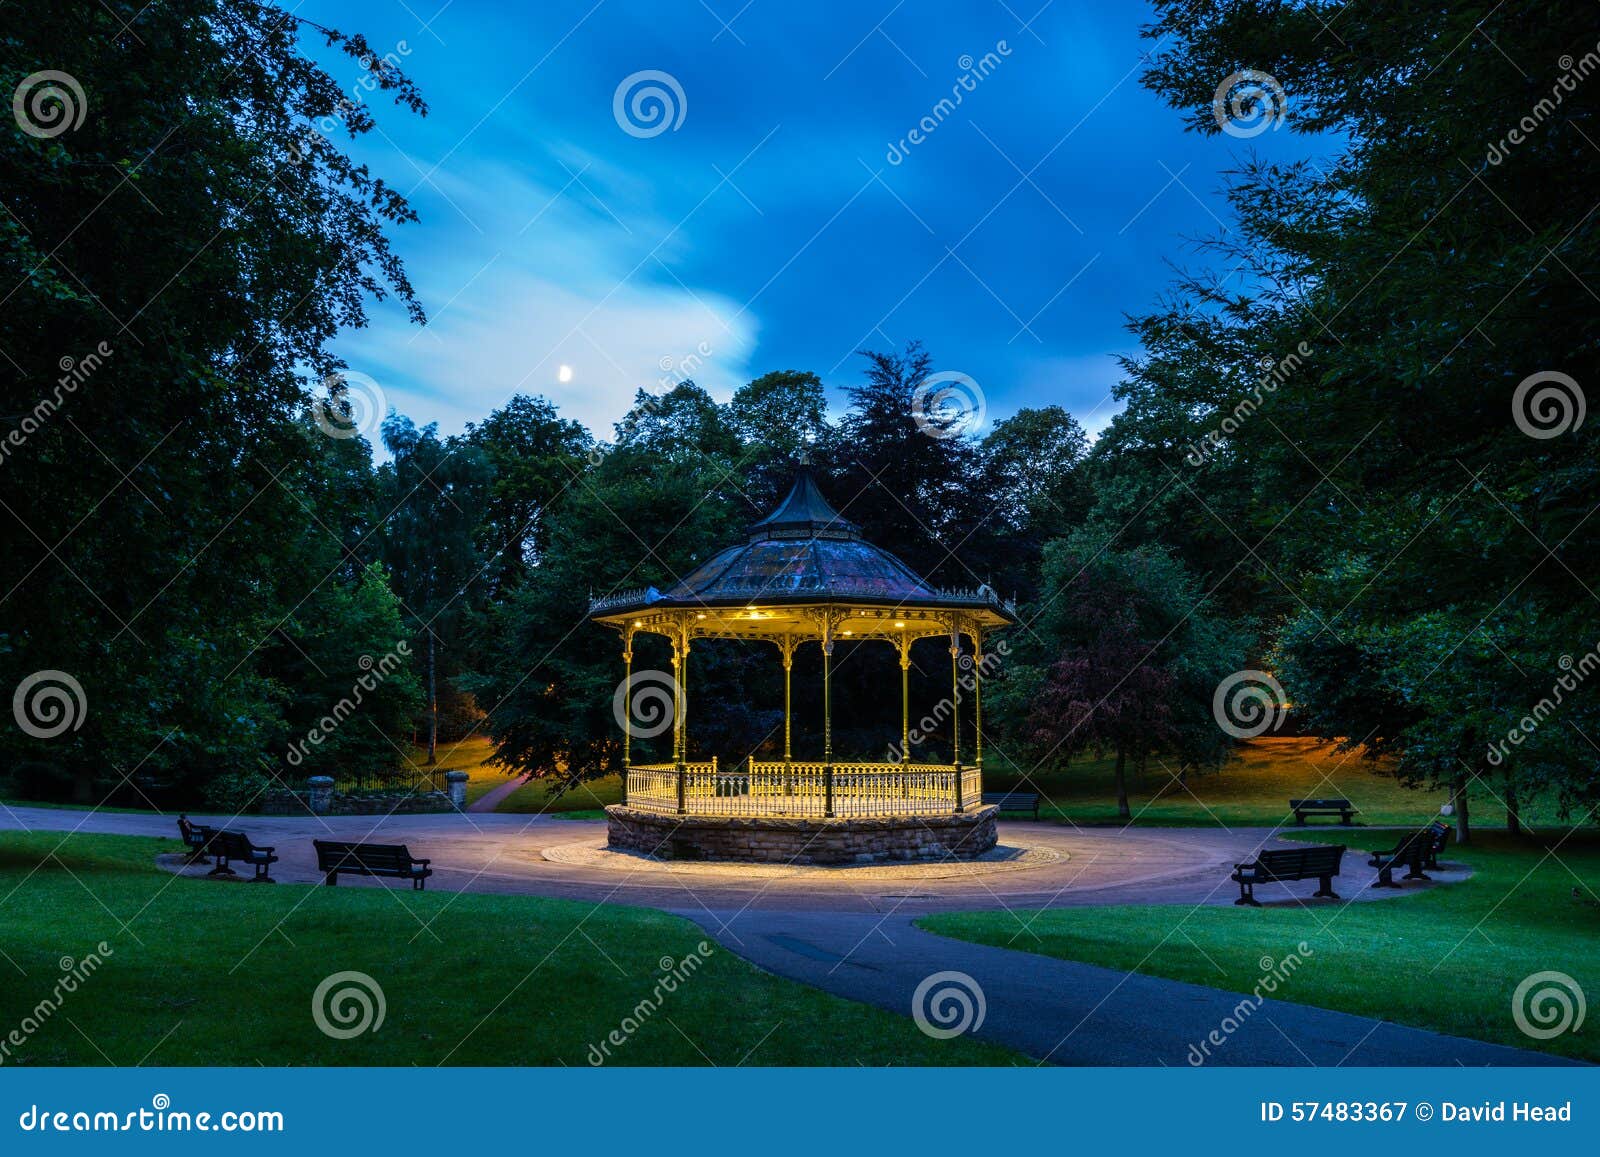 hexham bandstand at night